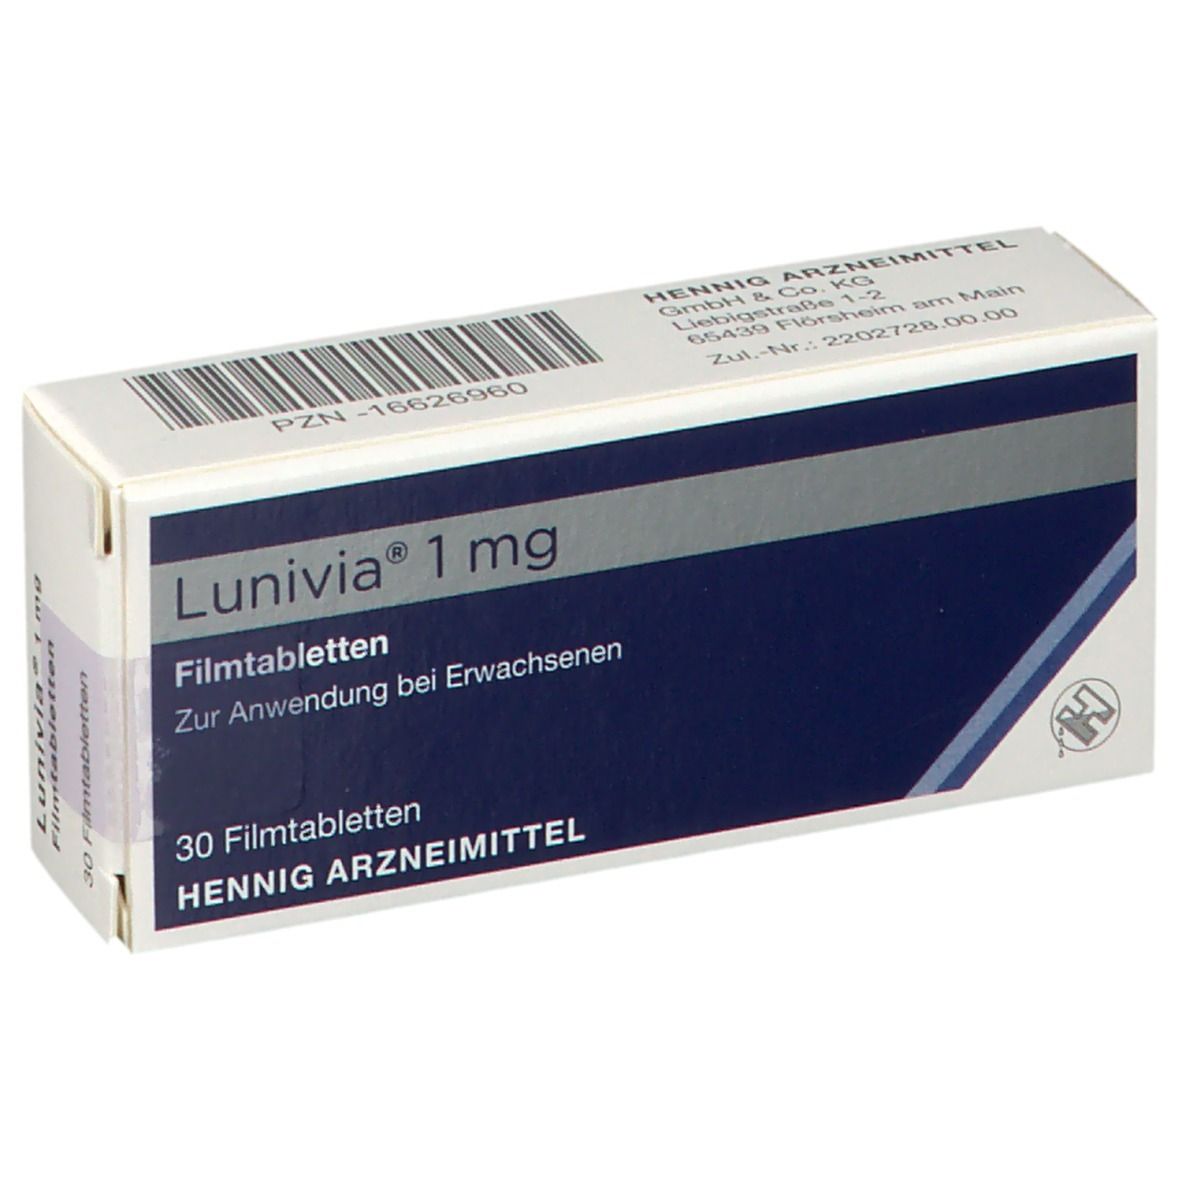 Lunivia 1 mg